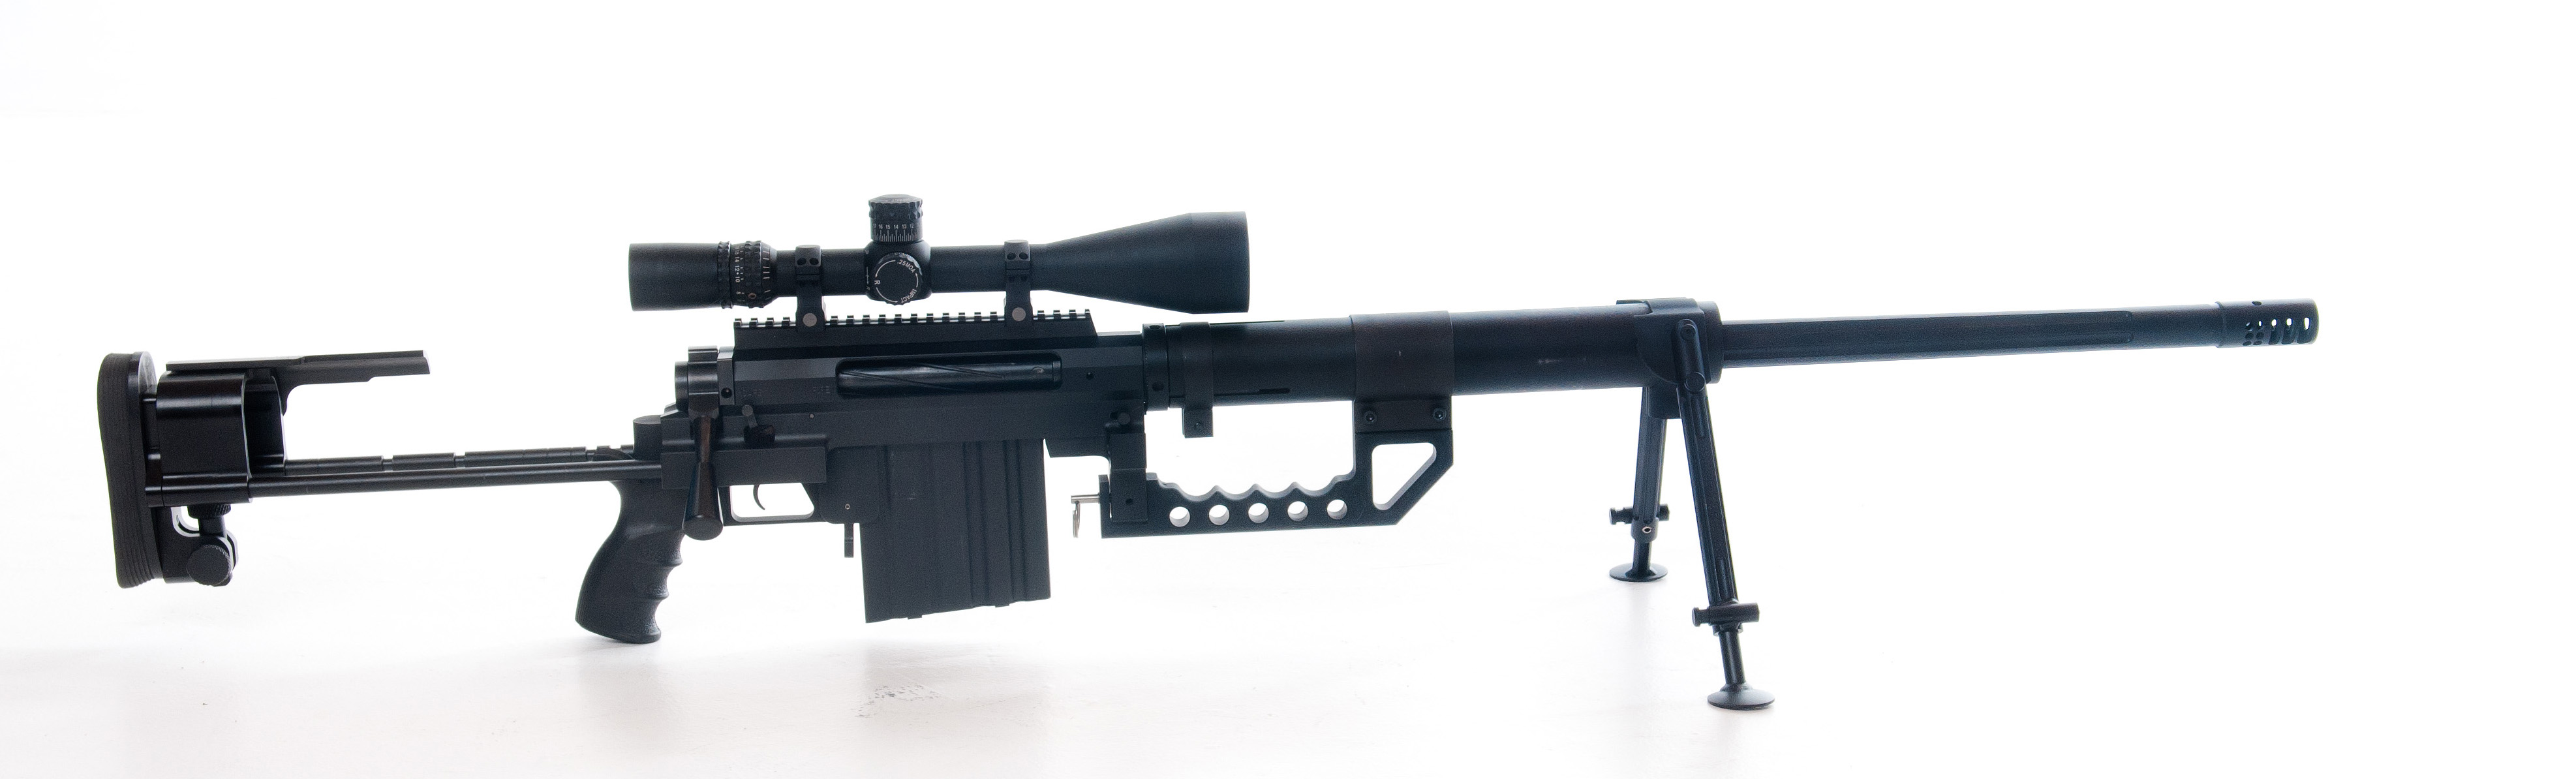 Cheytac M200 Intervention Sniper Rifle Widescreen image